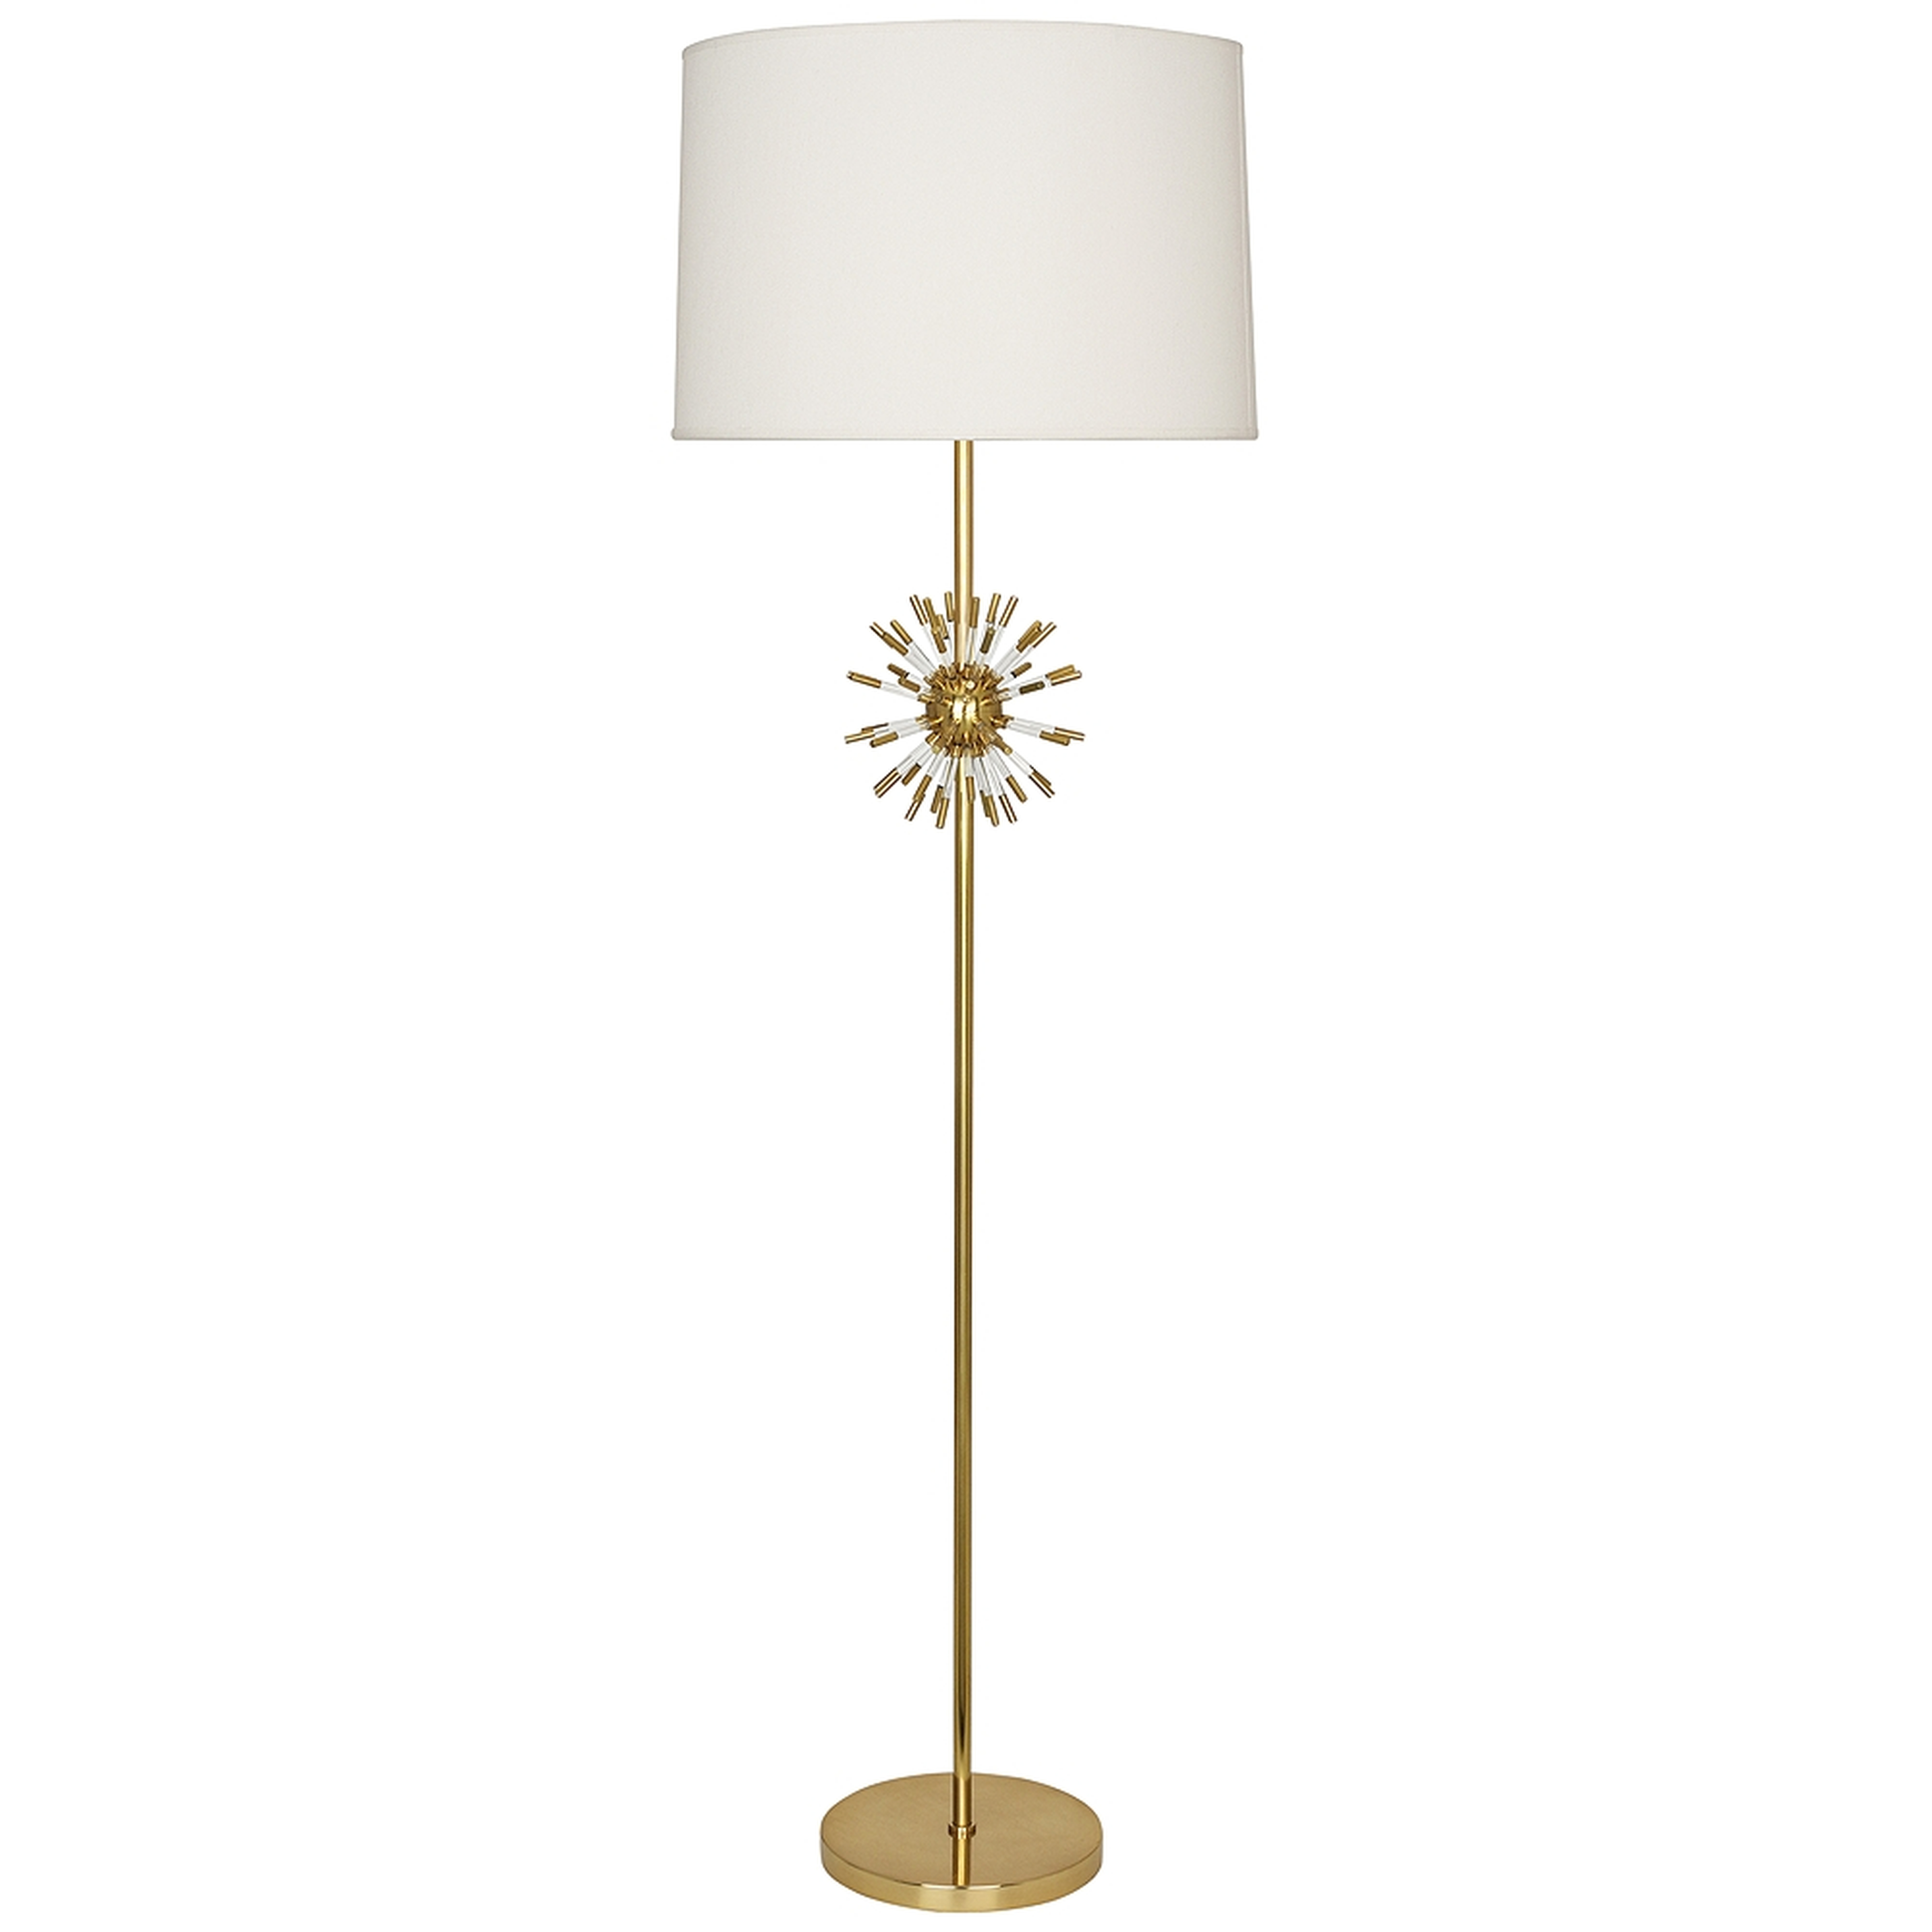 Robert Abbey Andromeda Modern Brass Floor Lamp - Style # 41C70 - Lamps Plus